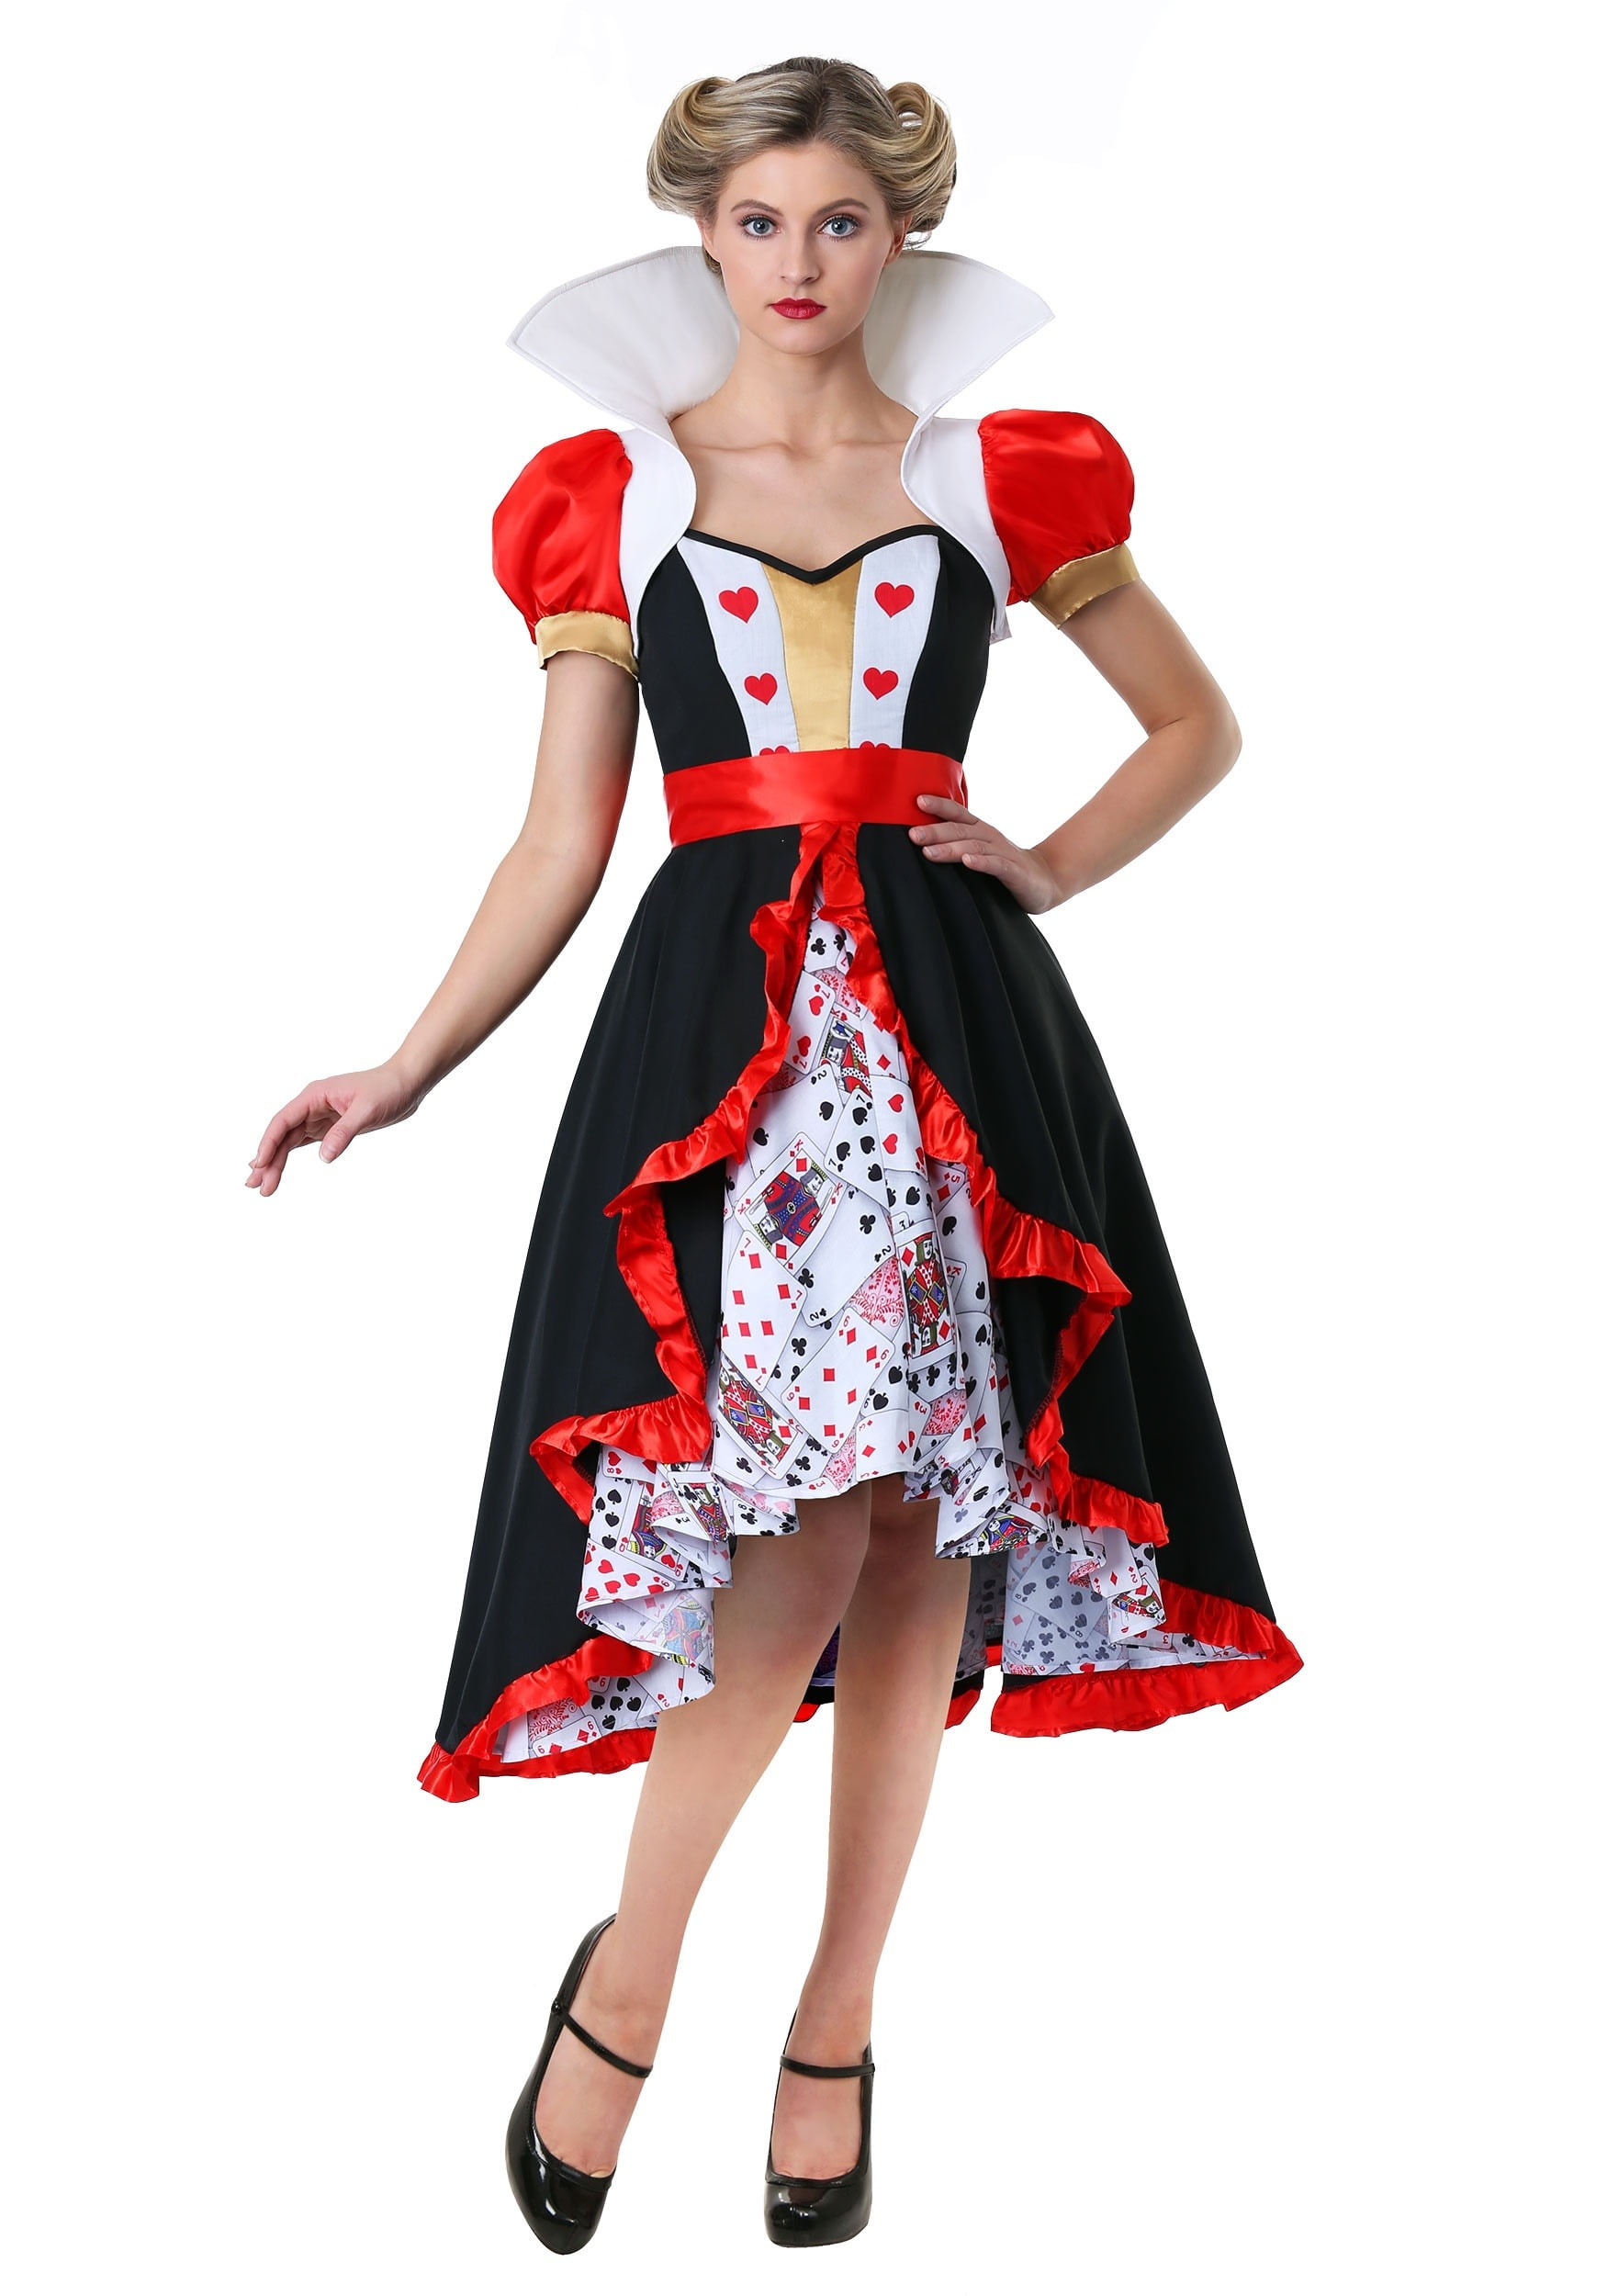 Plus Size Flirty Queen of Hearts Costume - Walmart.com - Walmart.com